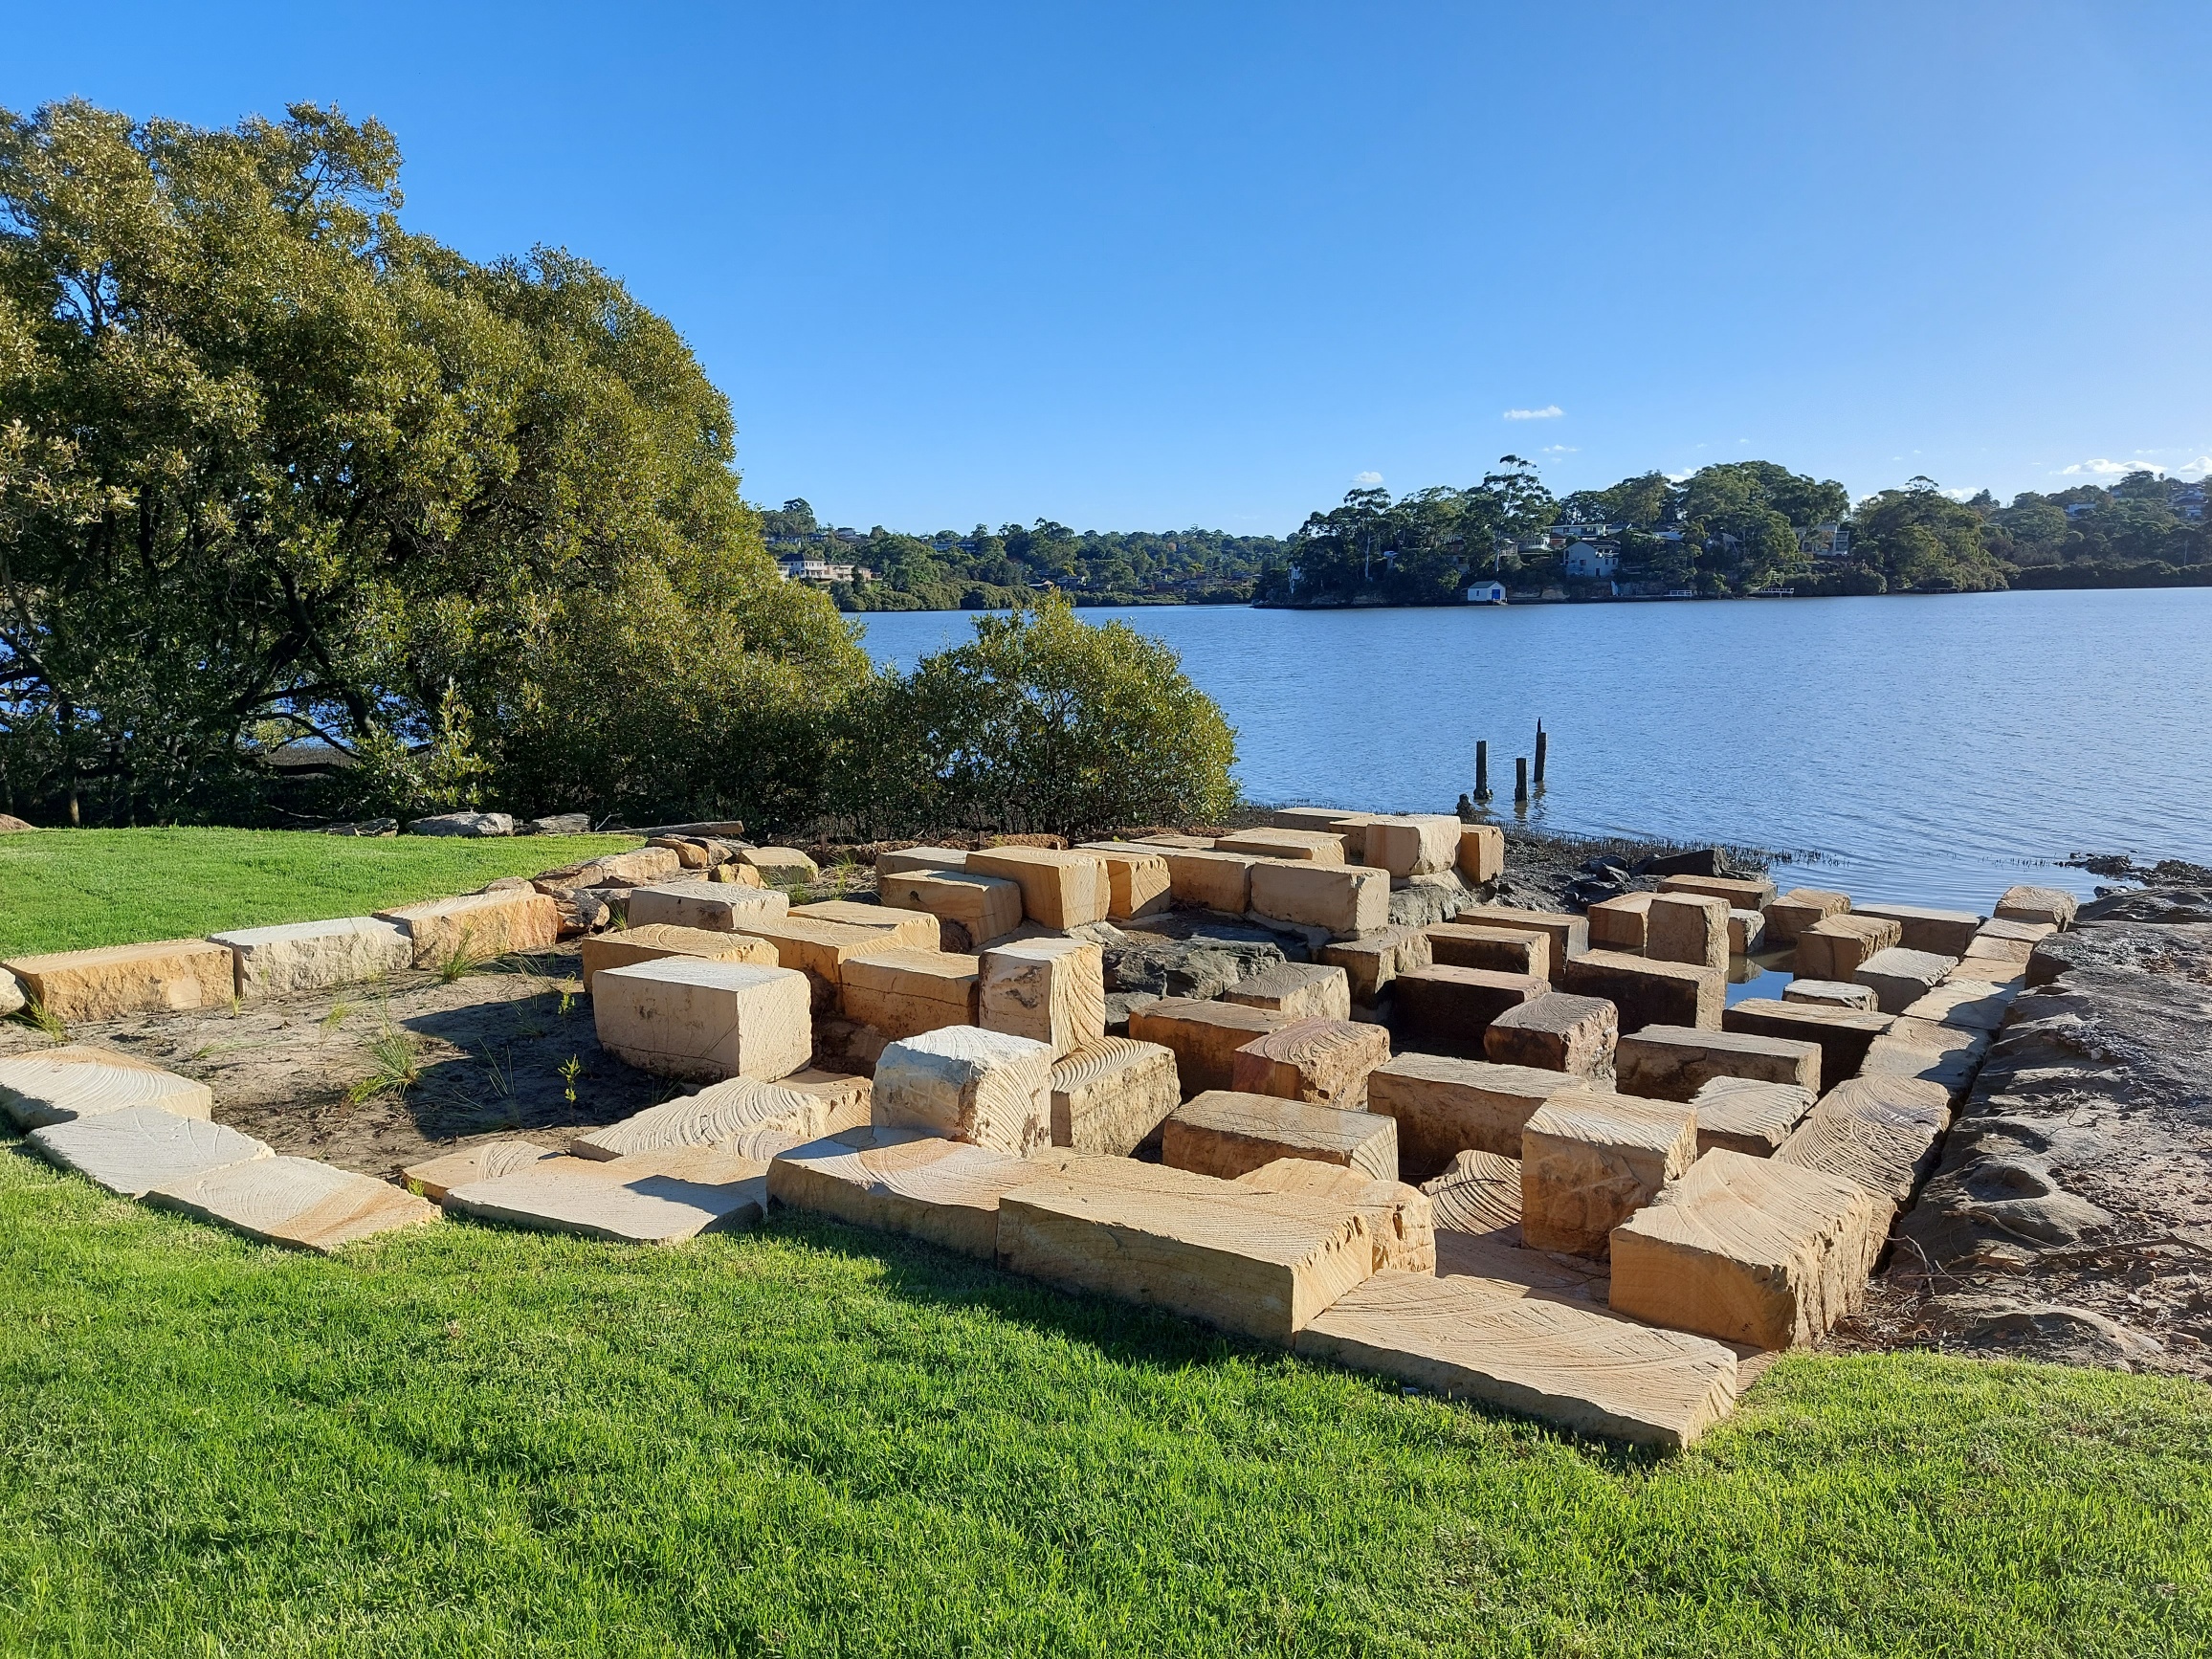 Waterfront treatment iwth sandstone blocks